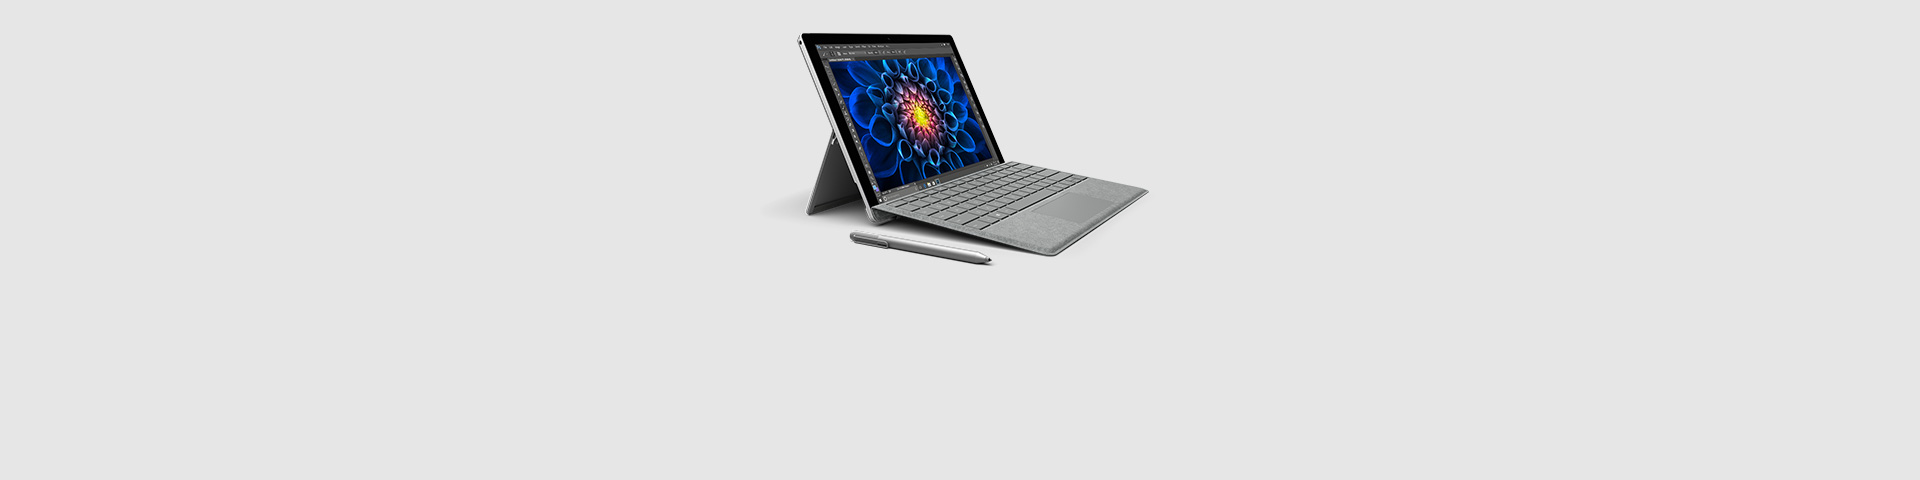 A Surface Pro 4 device